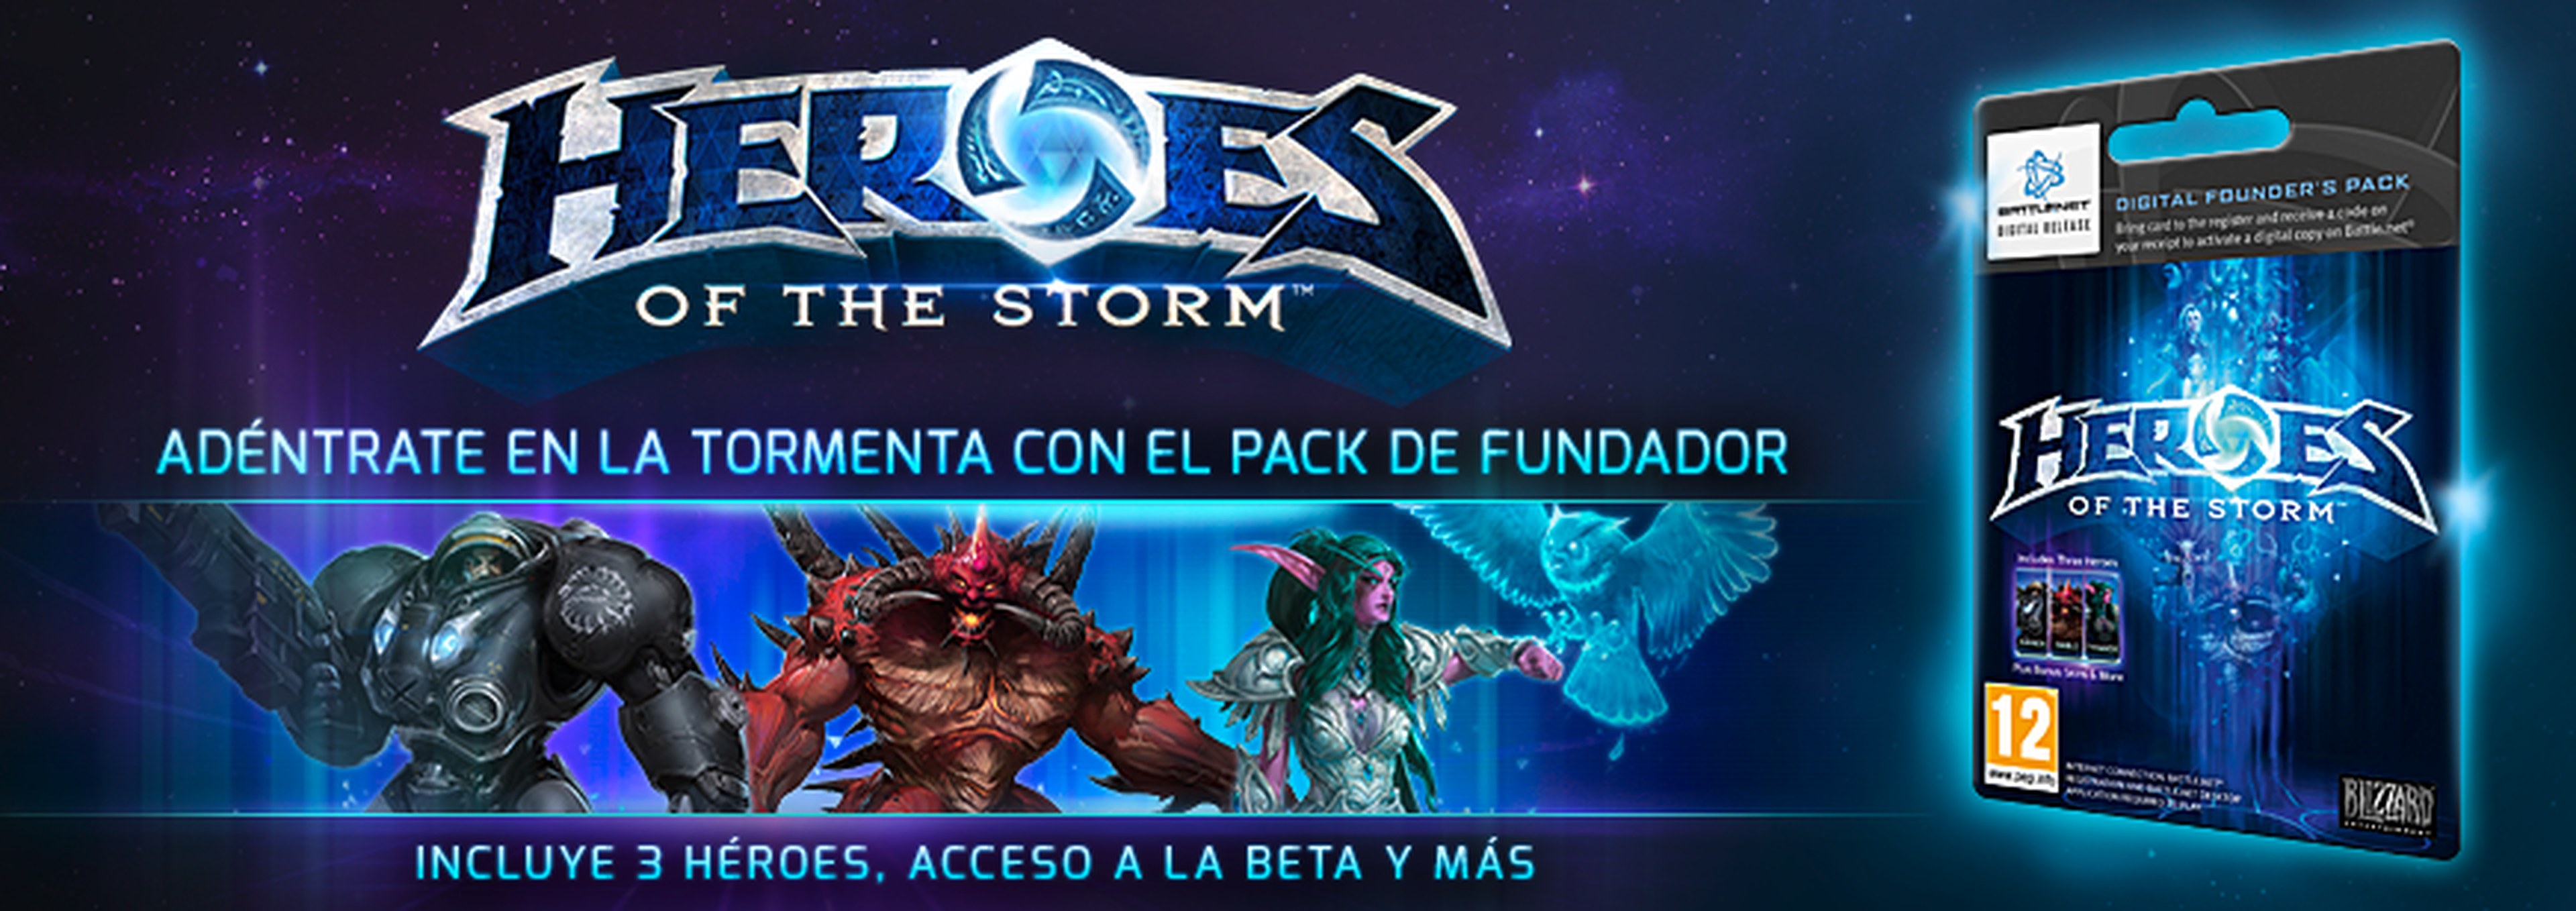 El Pack Fundador de Heroes of the Storm disponible en GAME